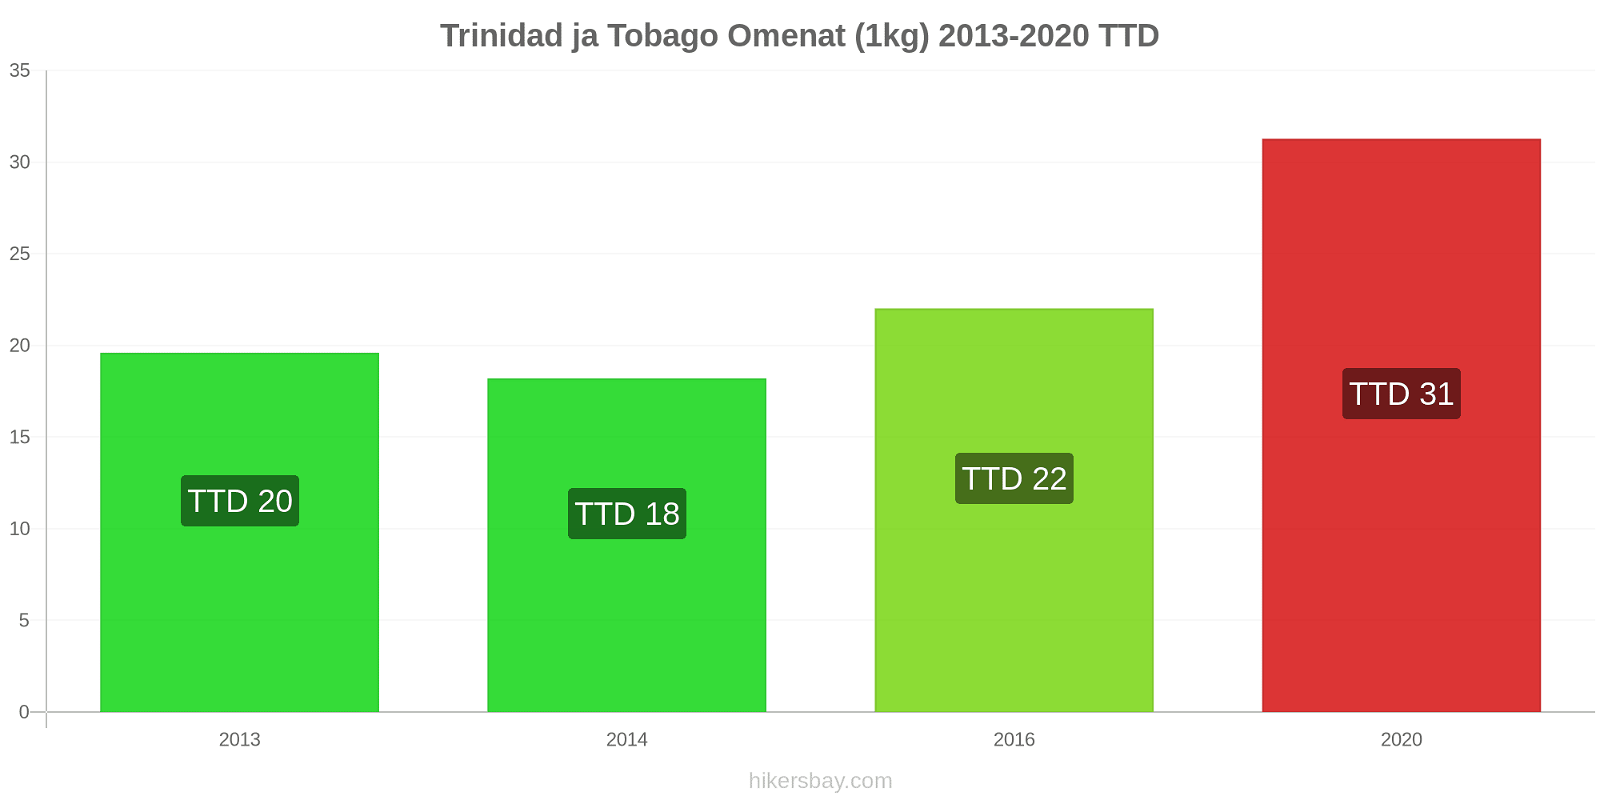 Trinidad ja Tobago hintojen muutokset Omenat (1kg) hikersbay.com